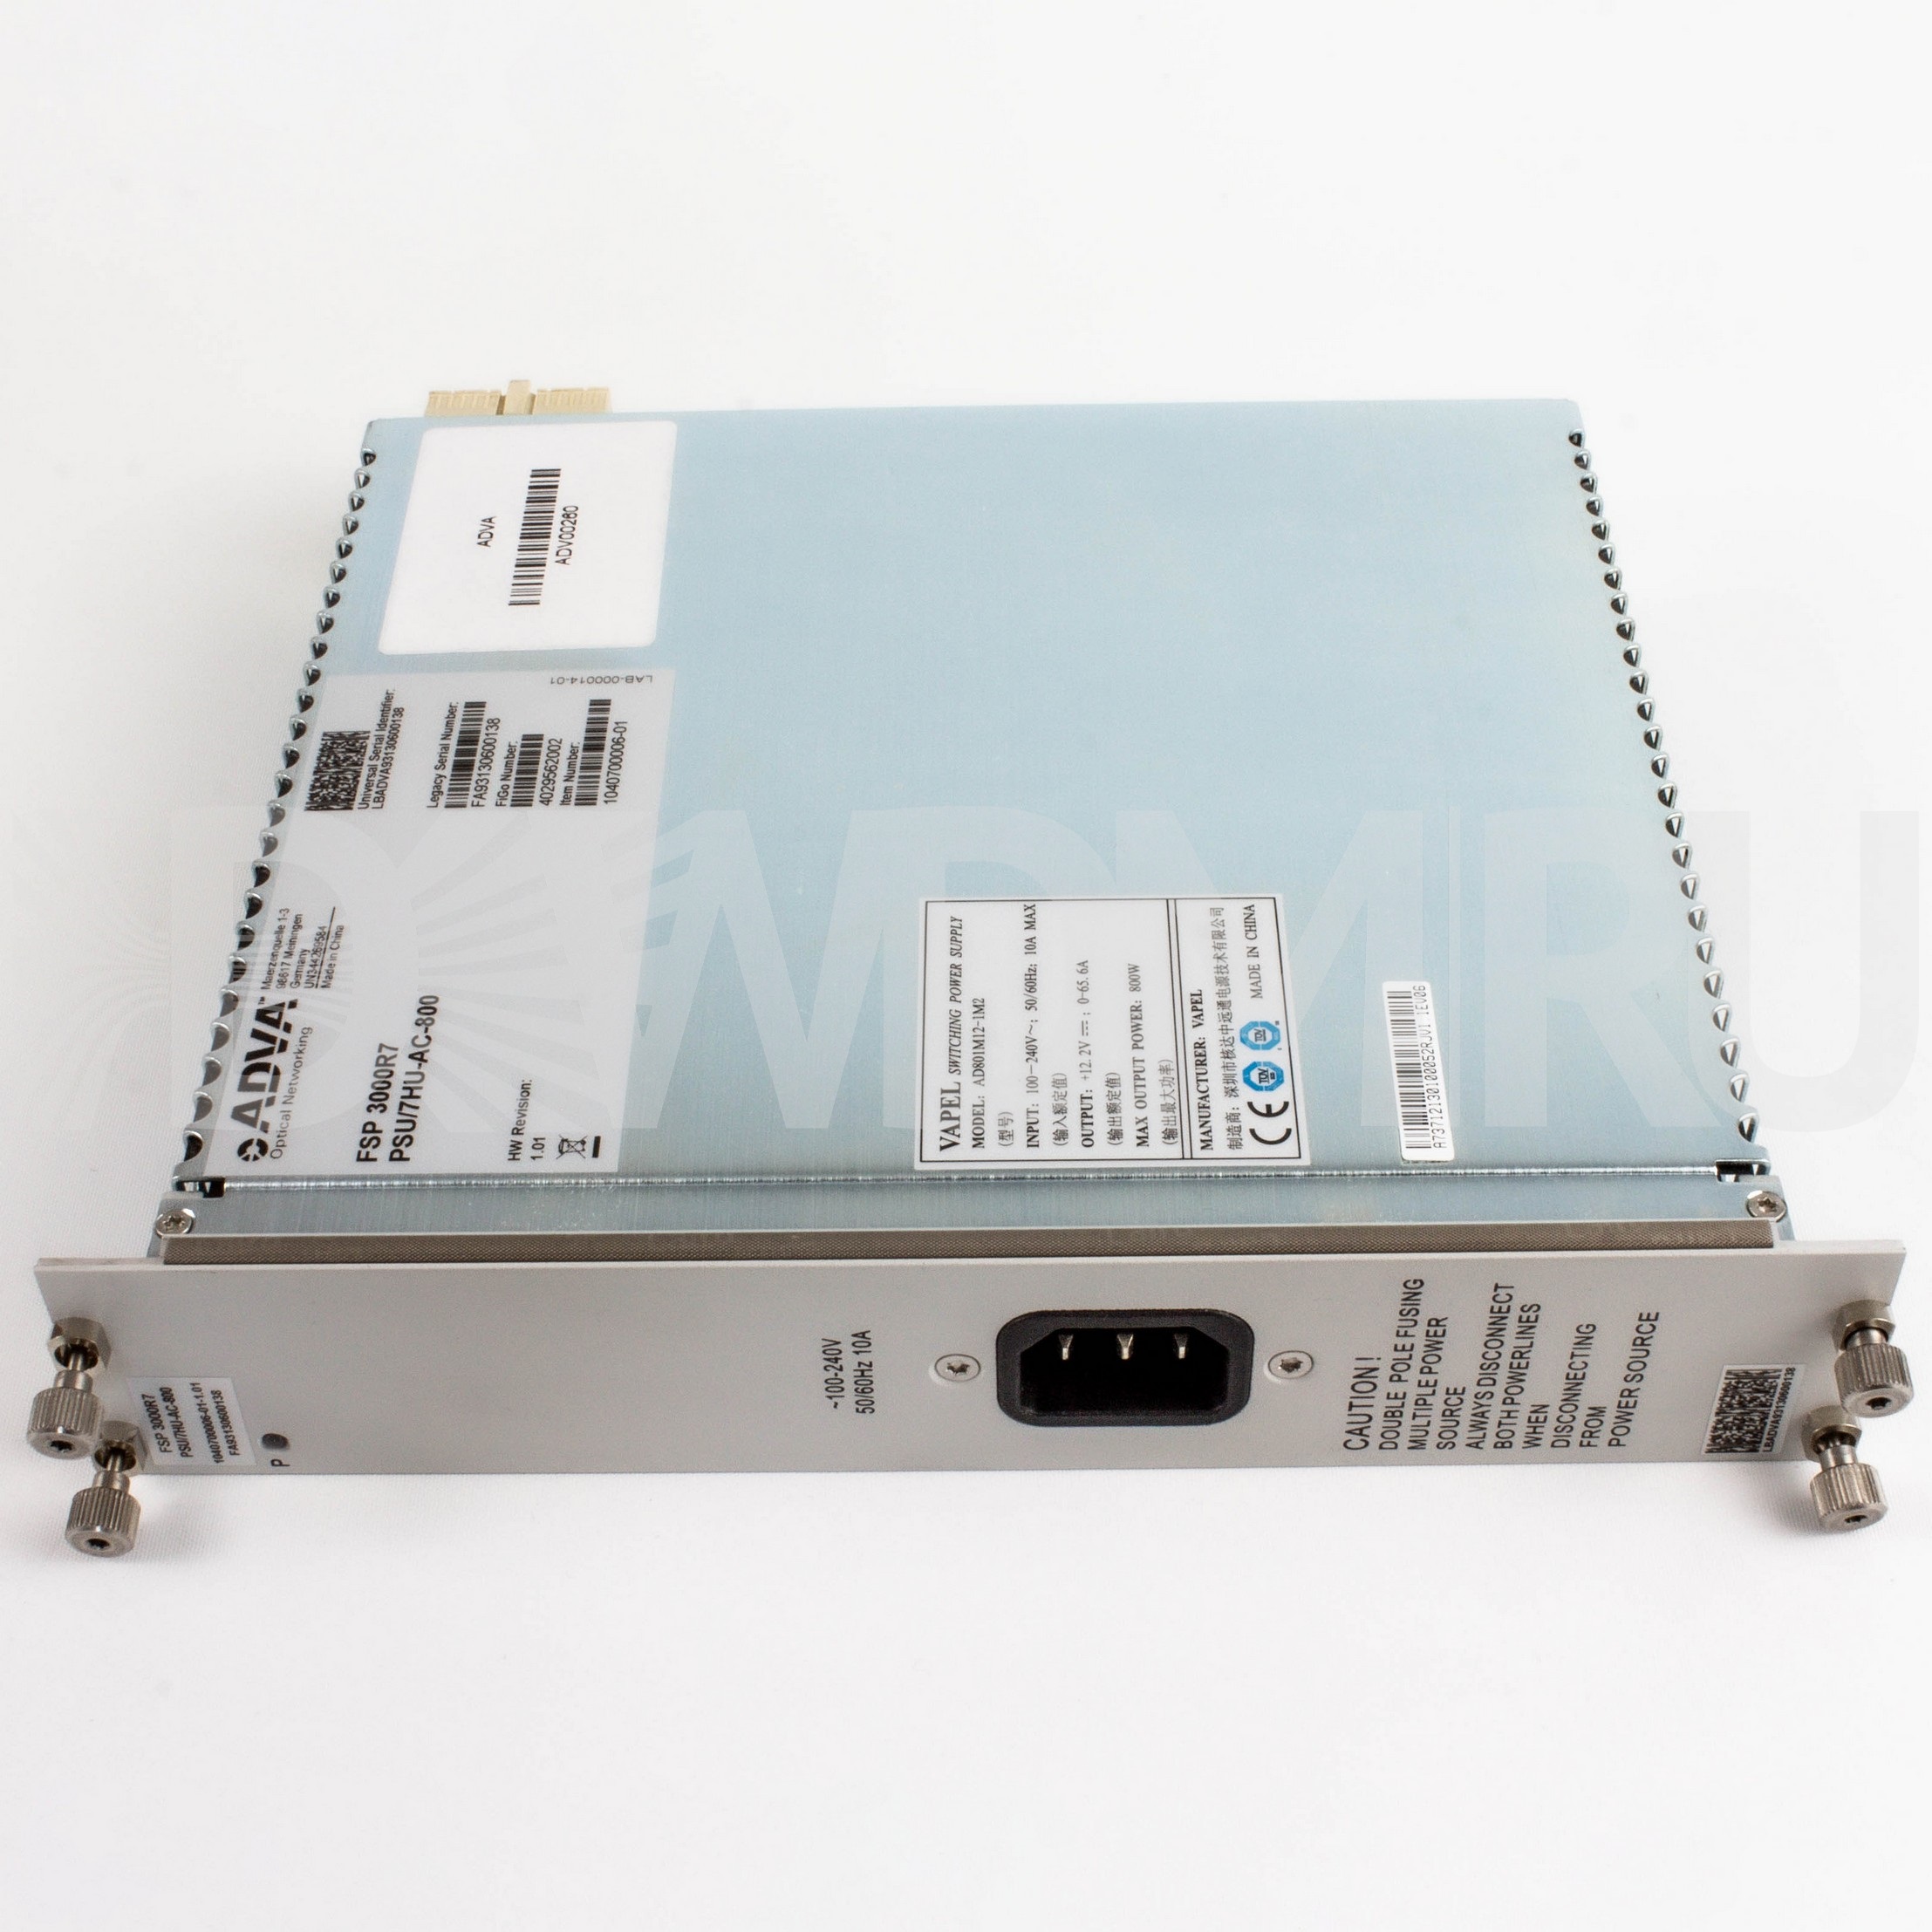 PSU/7HU-AC-HP Power Supply Module (600W) AC for SH7HU and SH9HU ADVA Optical pn